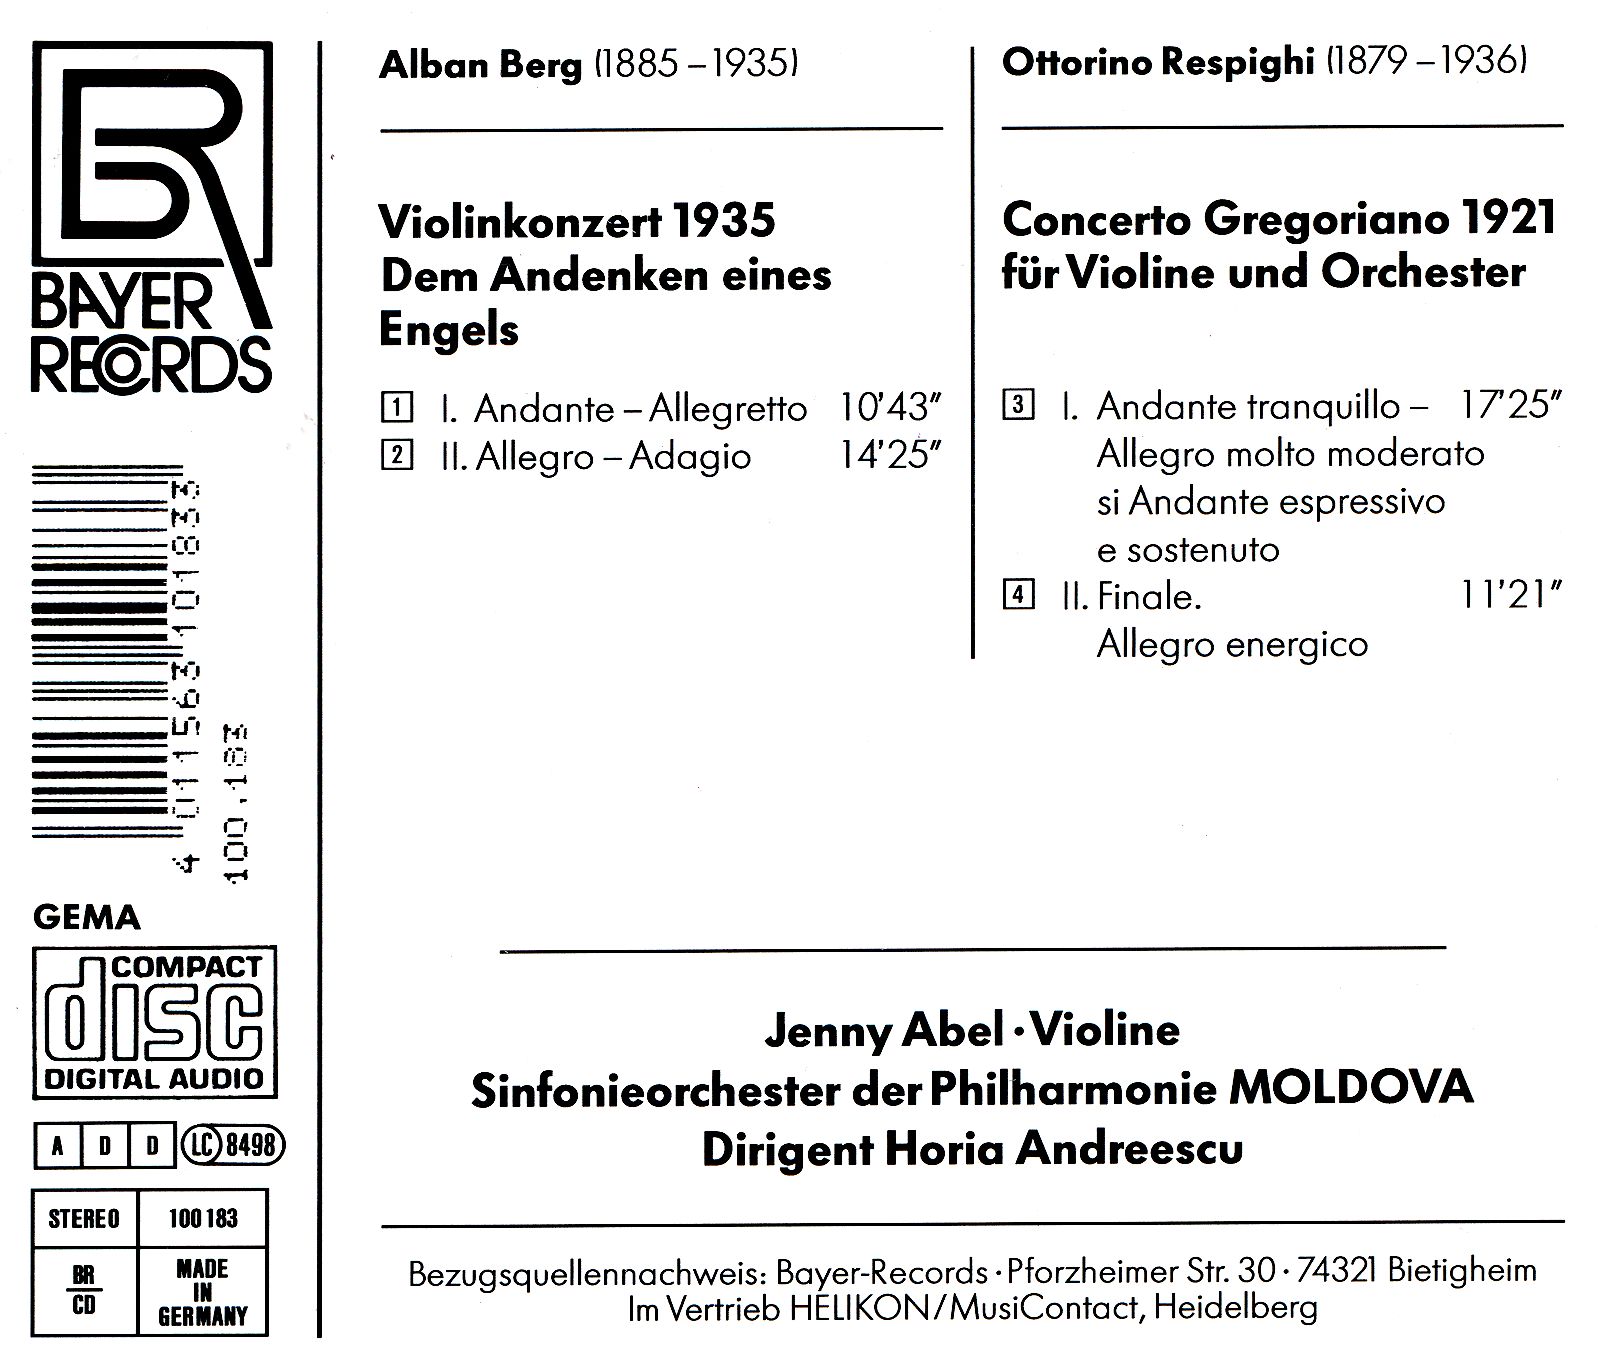 Ottorino Respighi / Alban Berg - Violinkonzerte